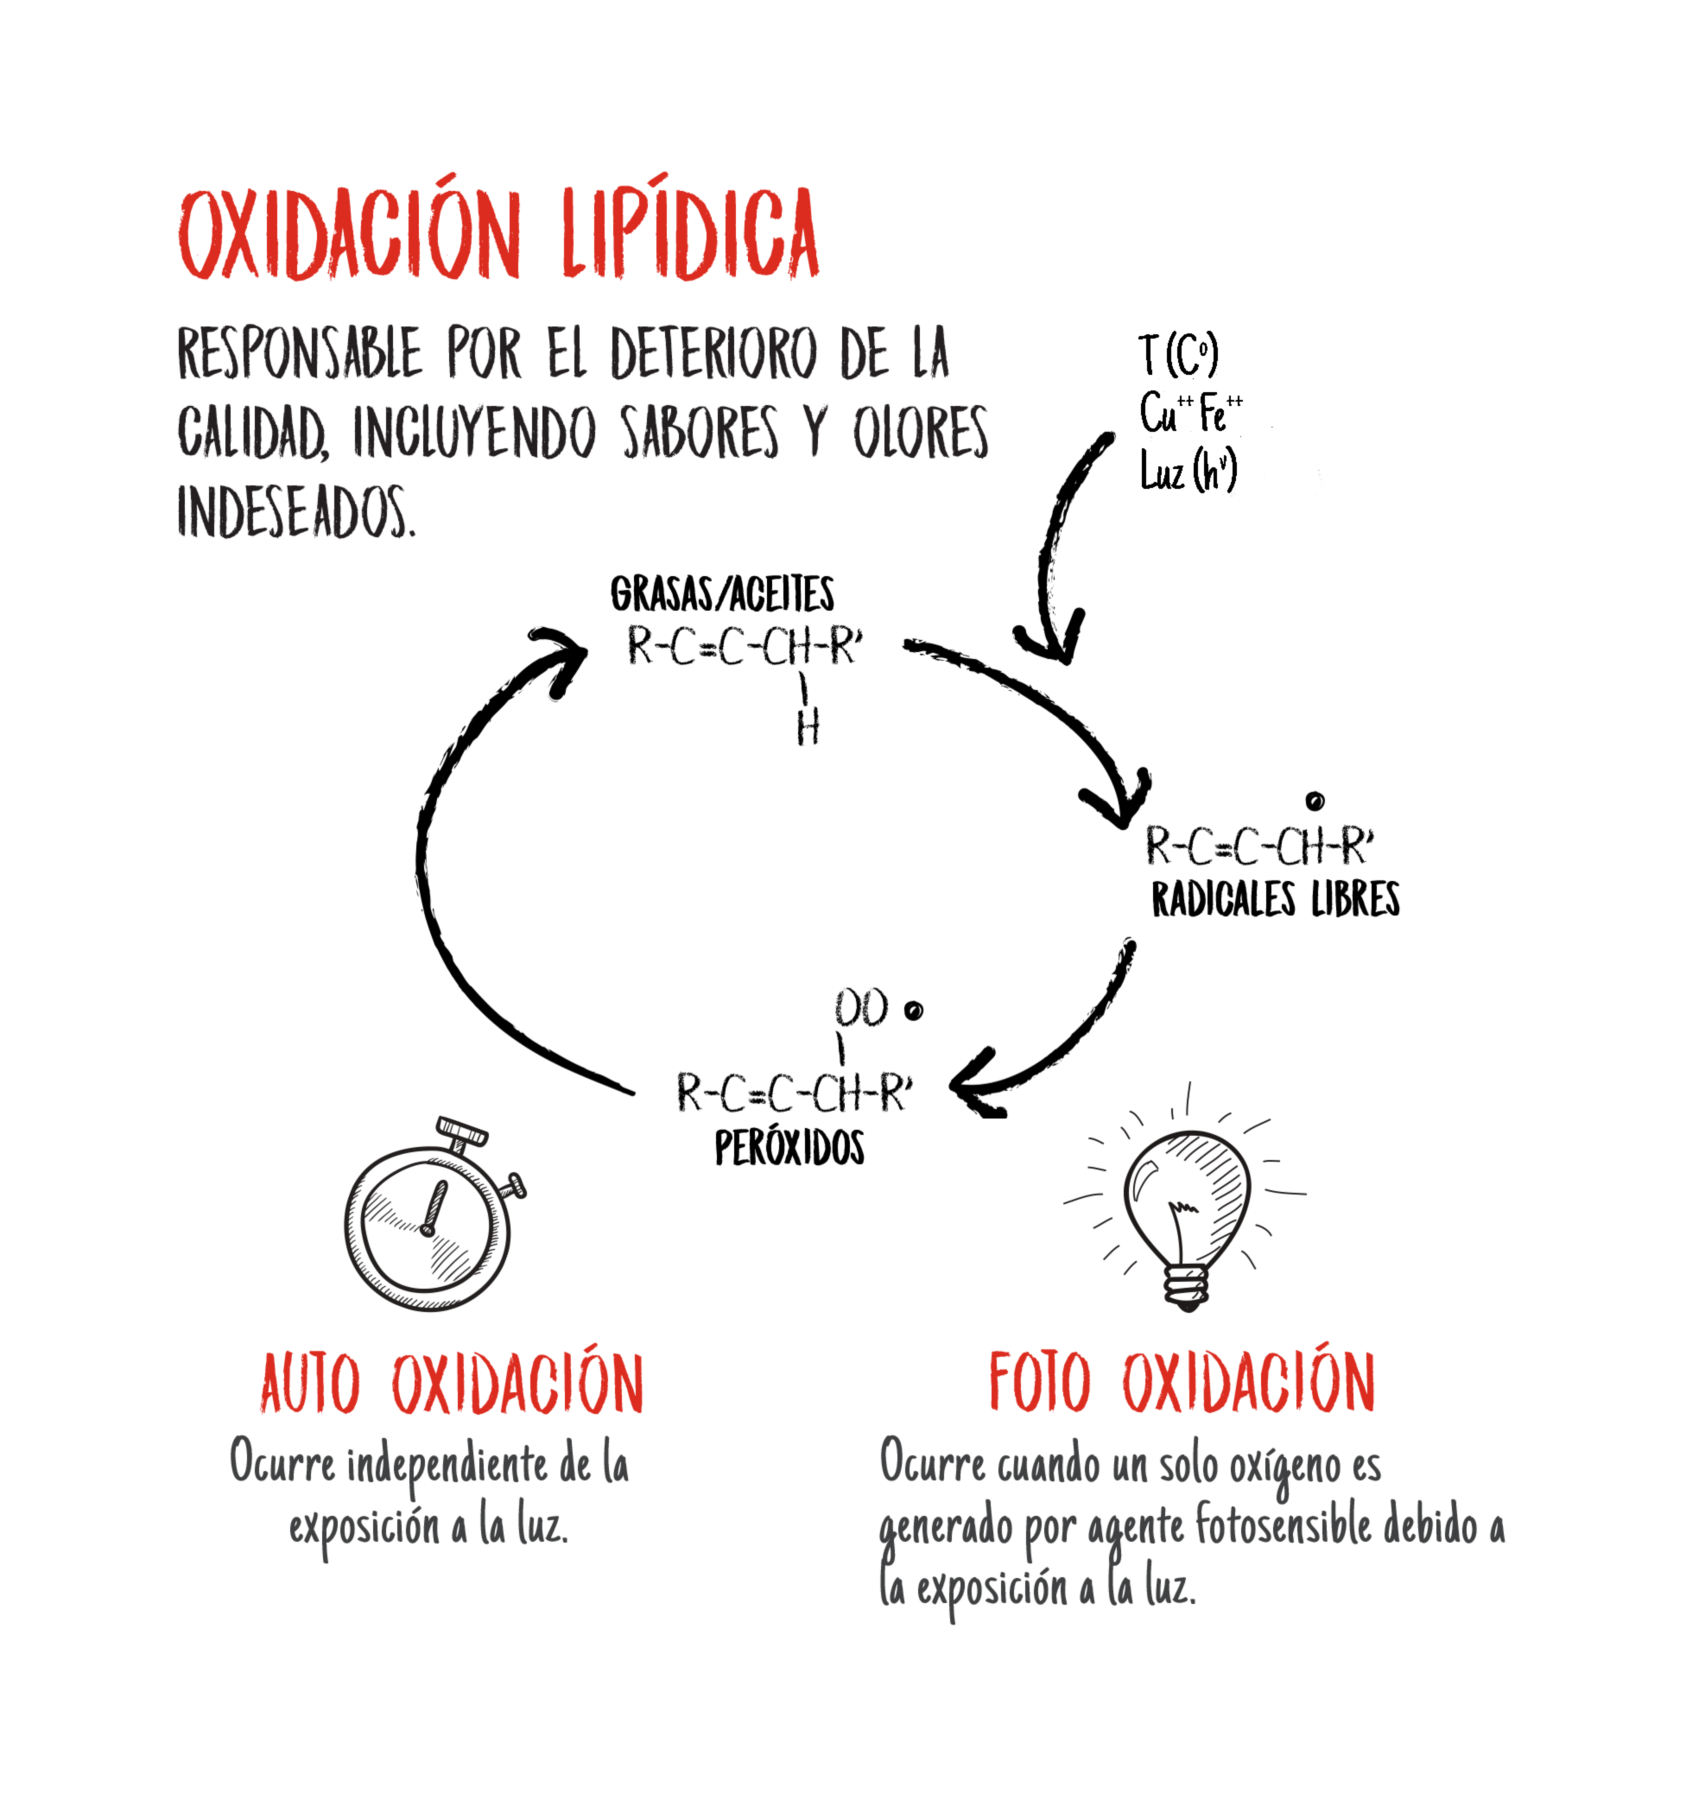 SA lipid oxidation graphic - Spanish